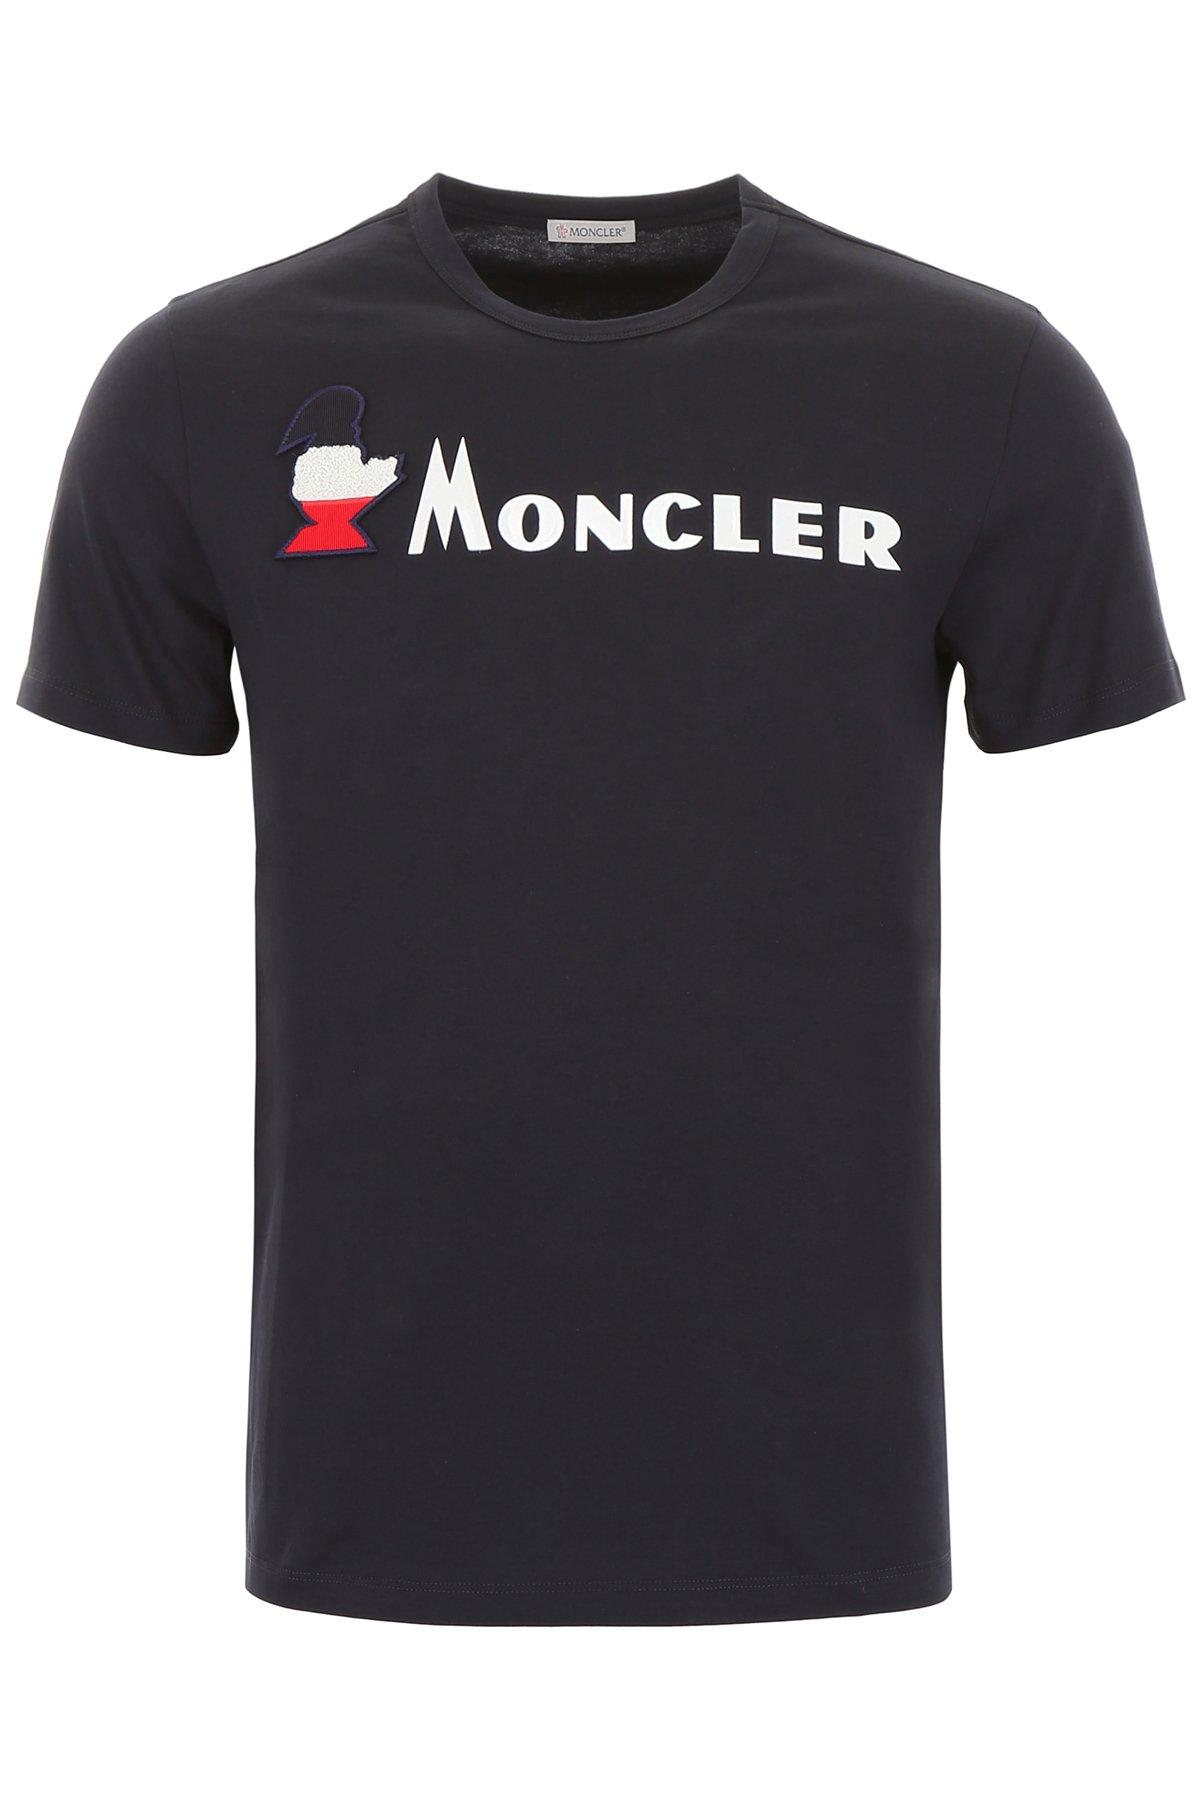 mens blue moncler t shirt